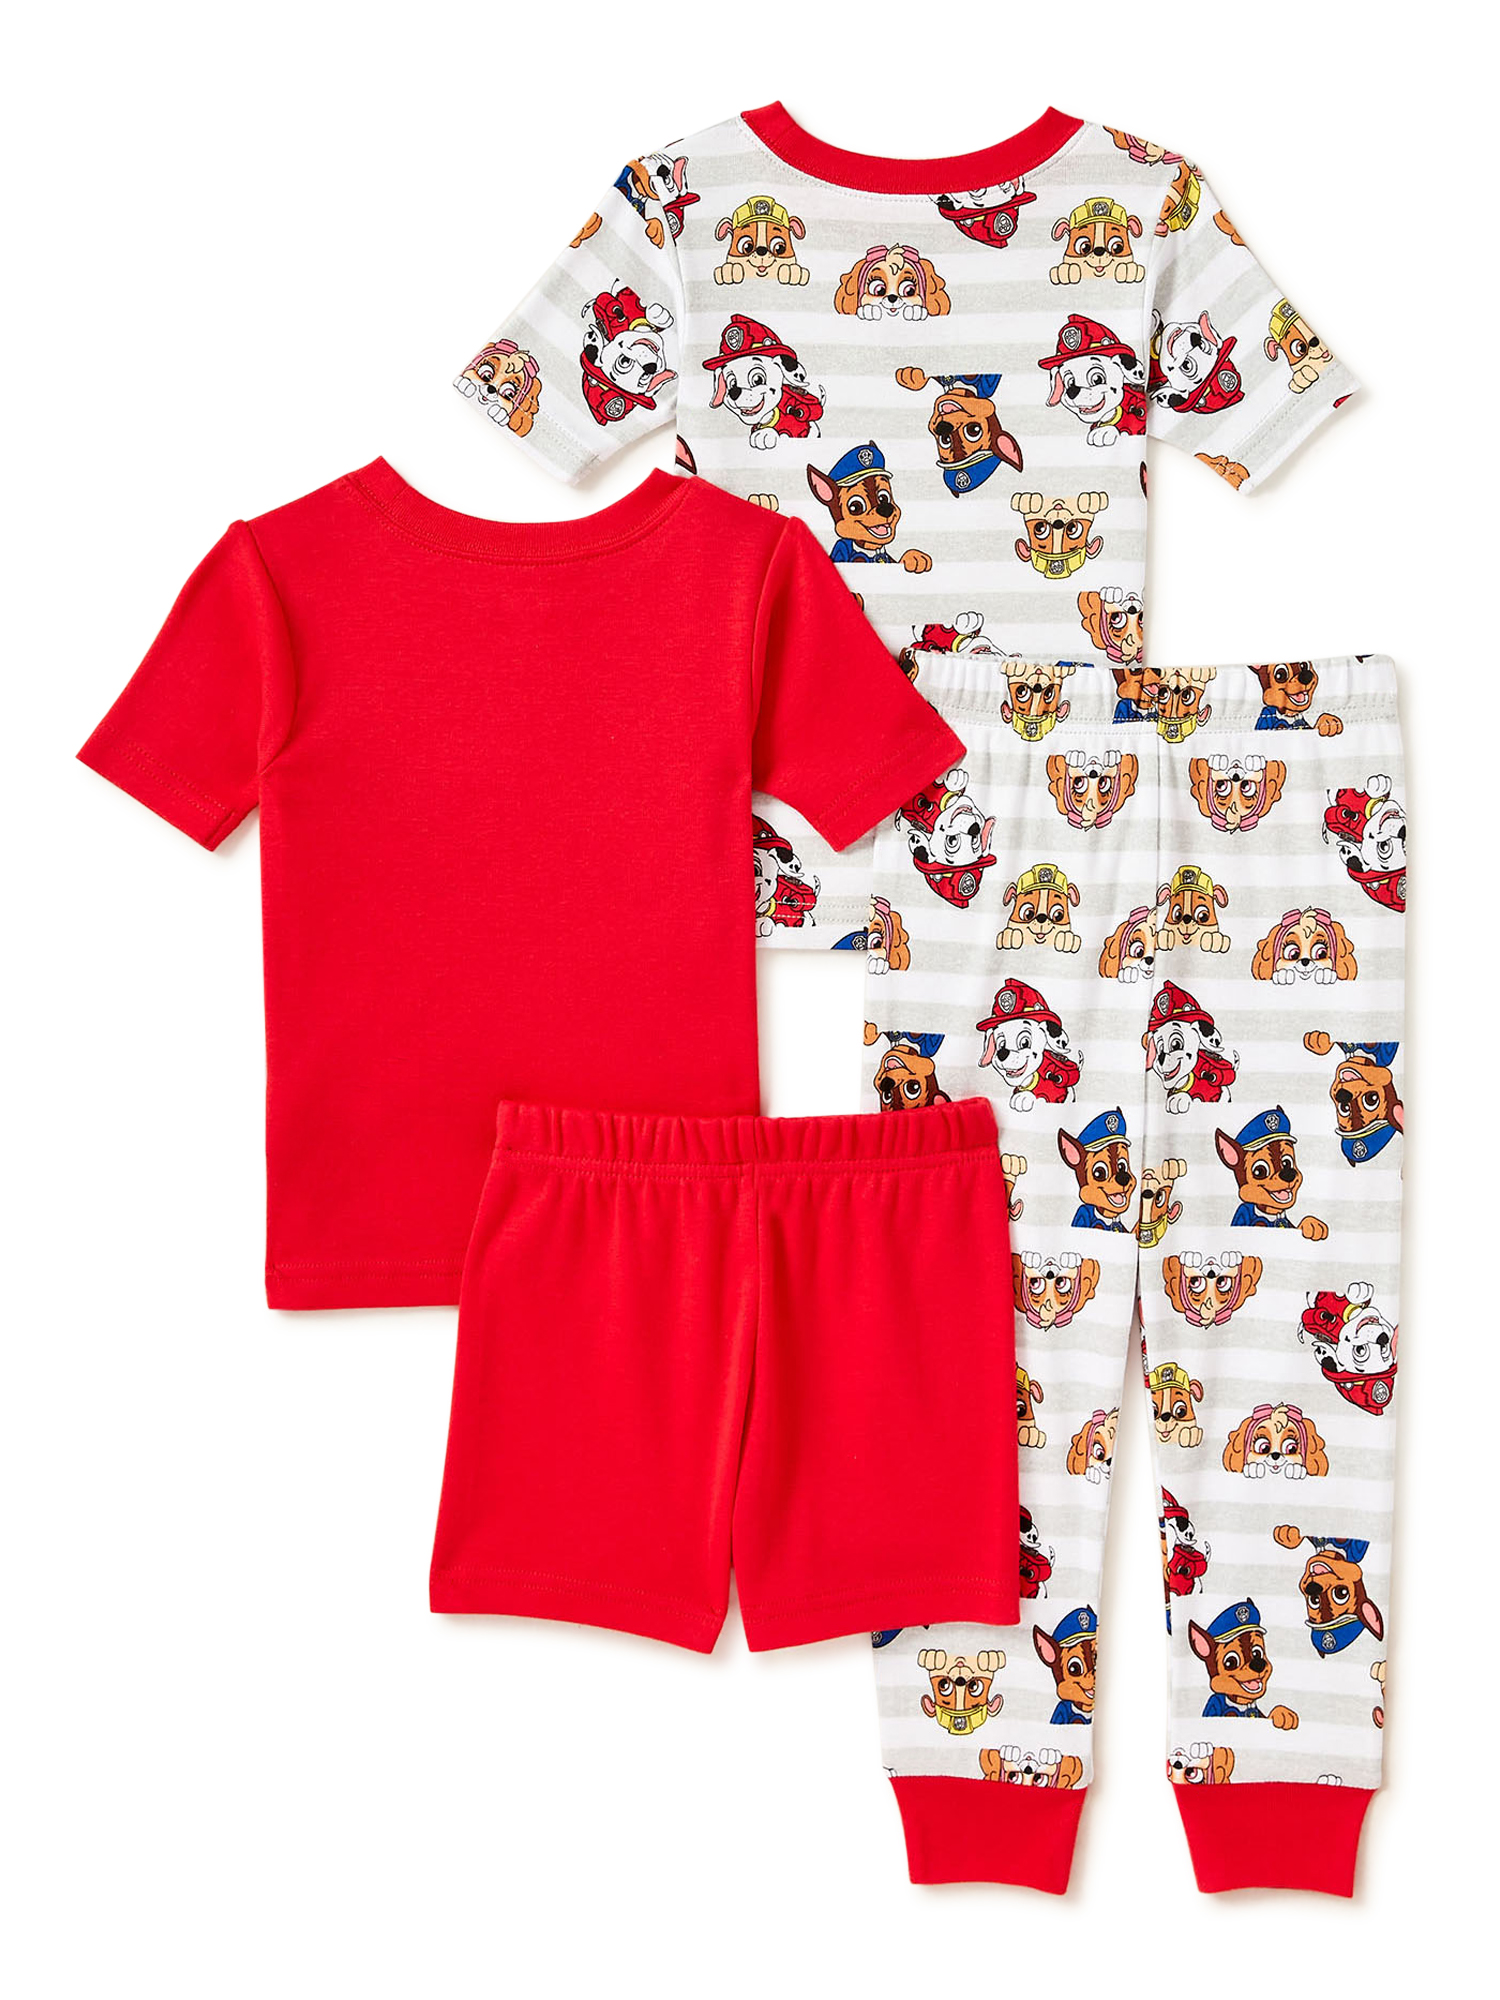 Paw Patrol Toddler Boys Loose Fit Short Sleeve Top & Shorts, 2-Piece Pajamas Set, Sizes 2T-5T - image 2 of 3